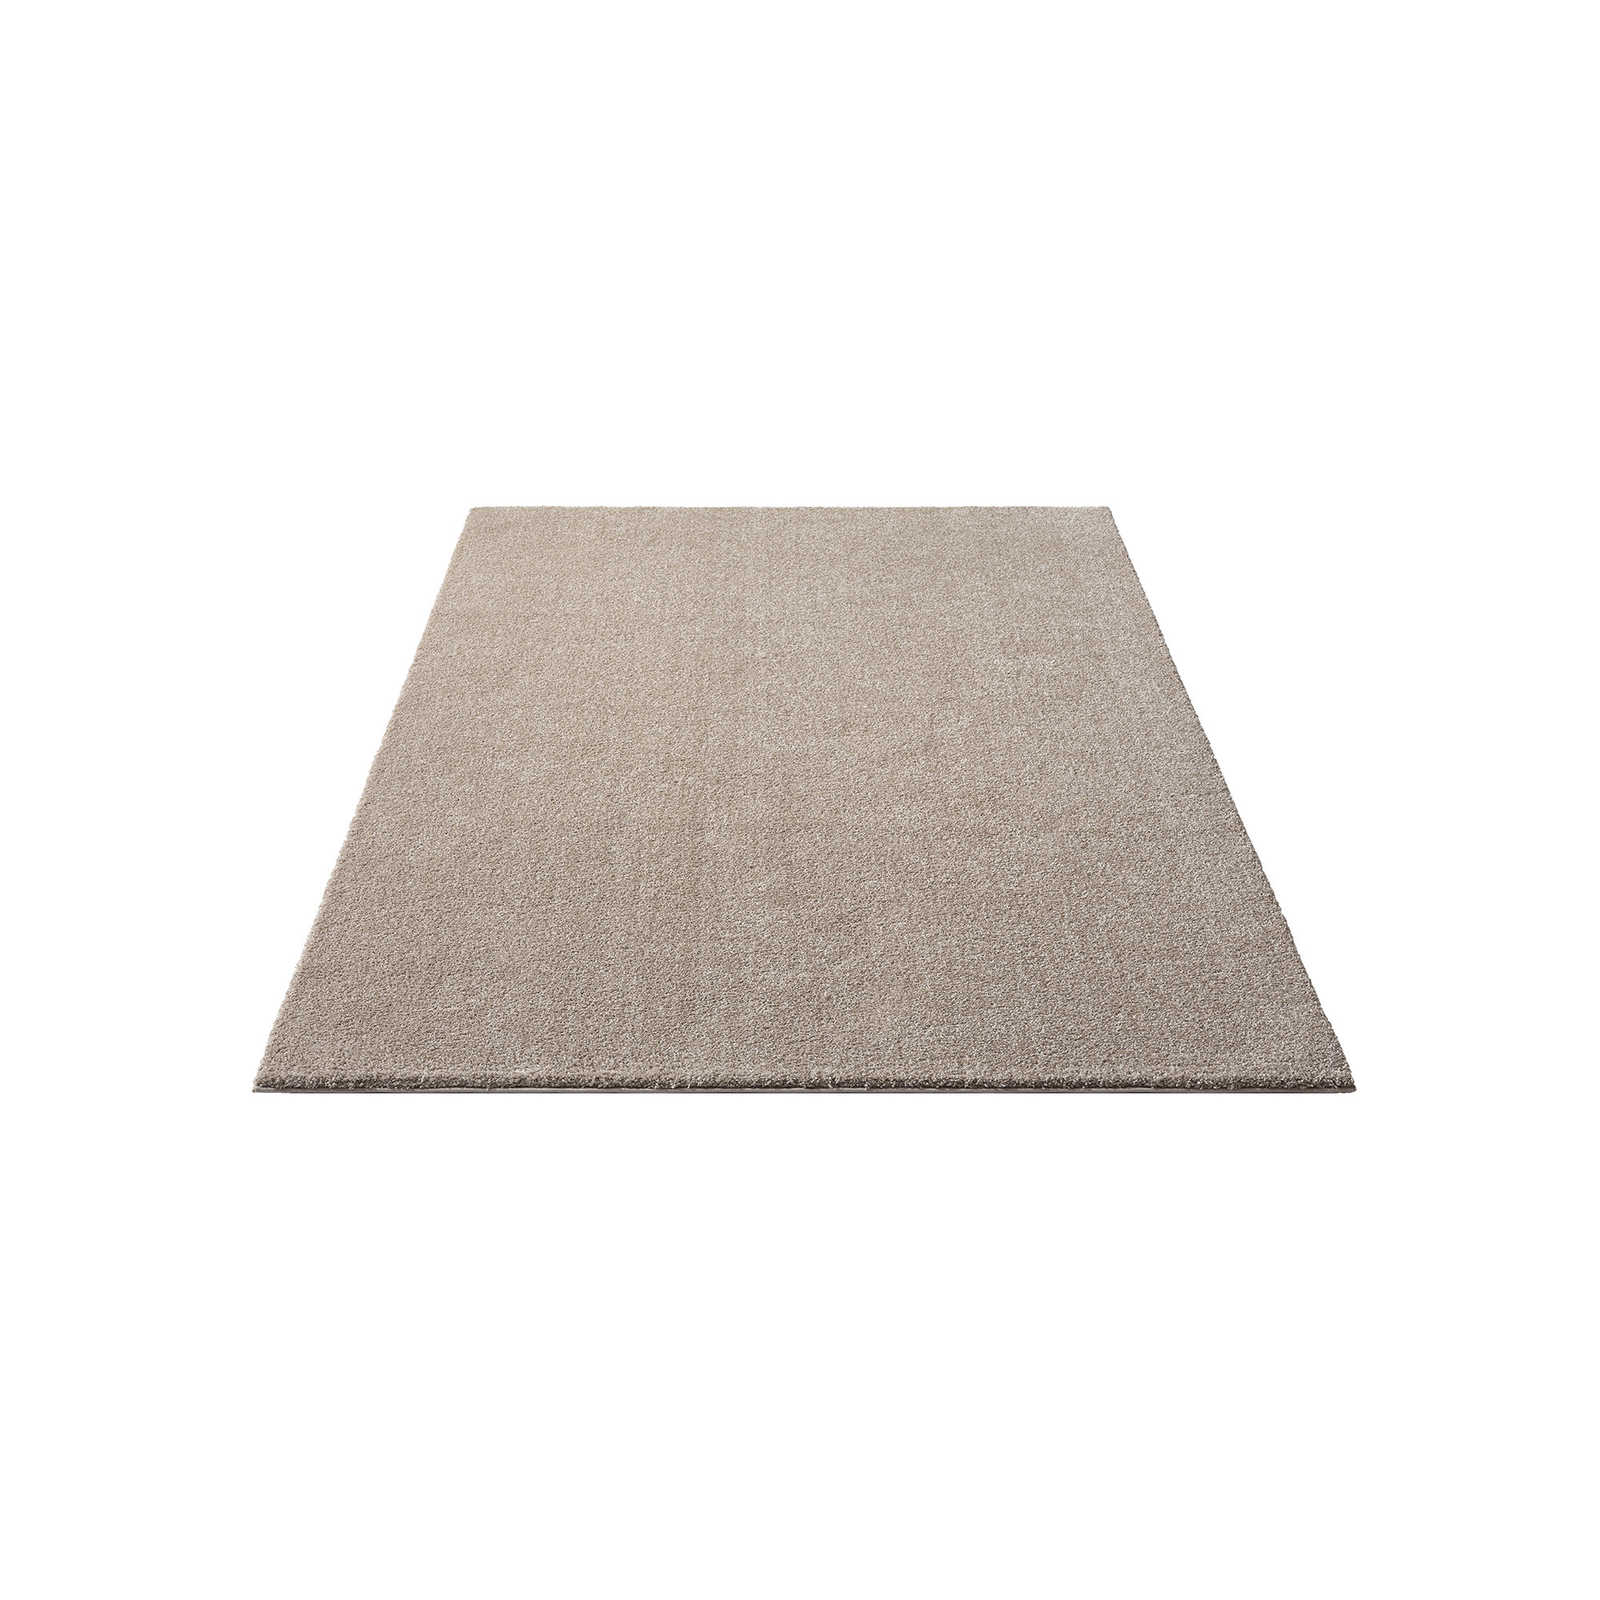 Soft short pile carpet in beige - 200 x 140 cm
